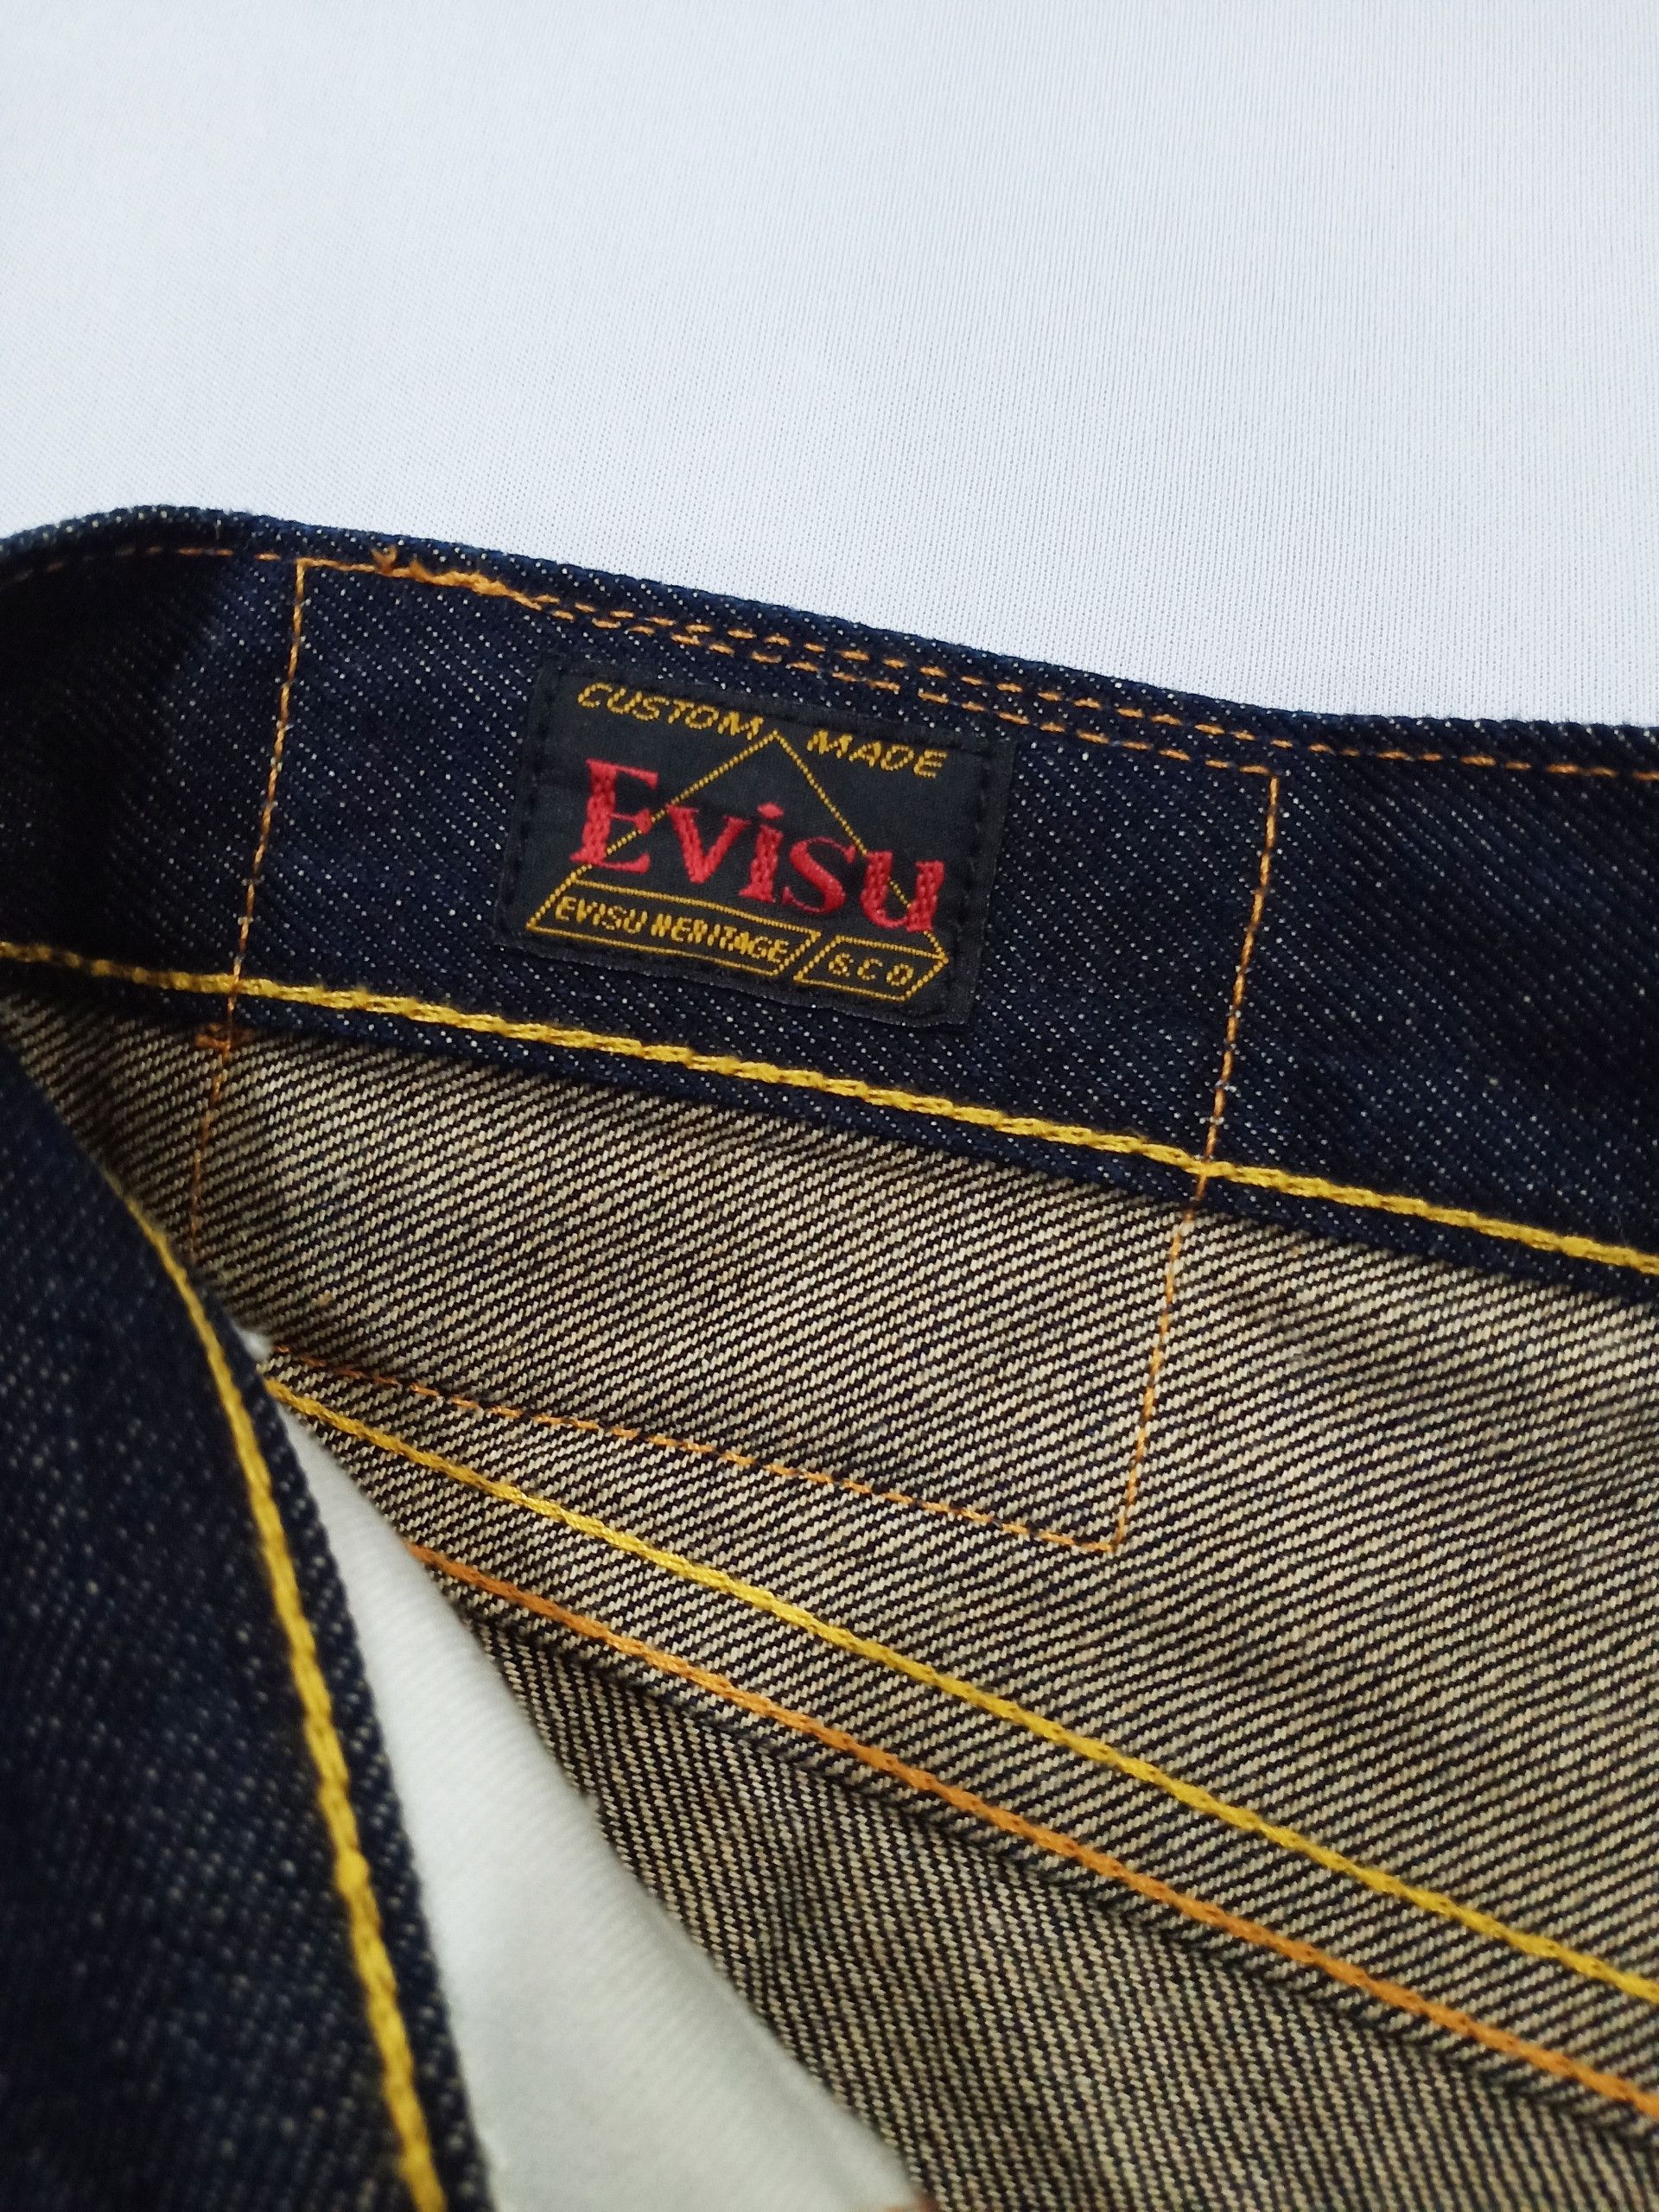 Evisu Evisu Multi Pocket Diacock Selvedge Jeans Size US 36 / EU 52 - 9 Thumbnail